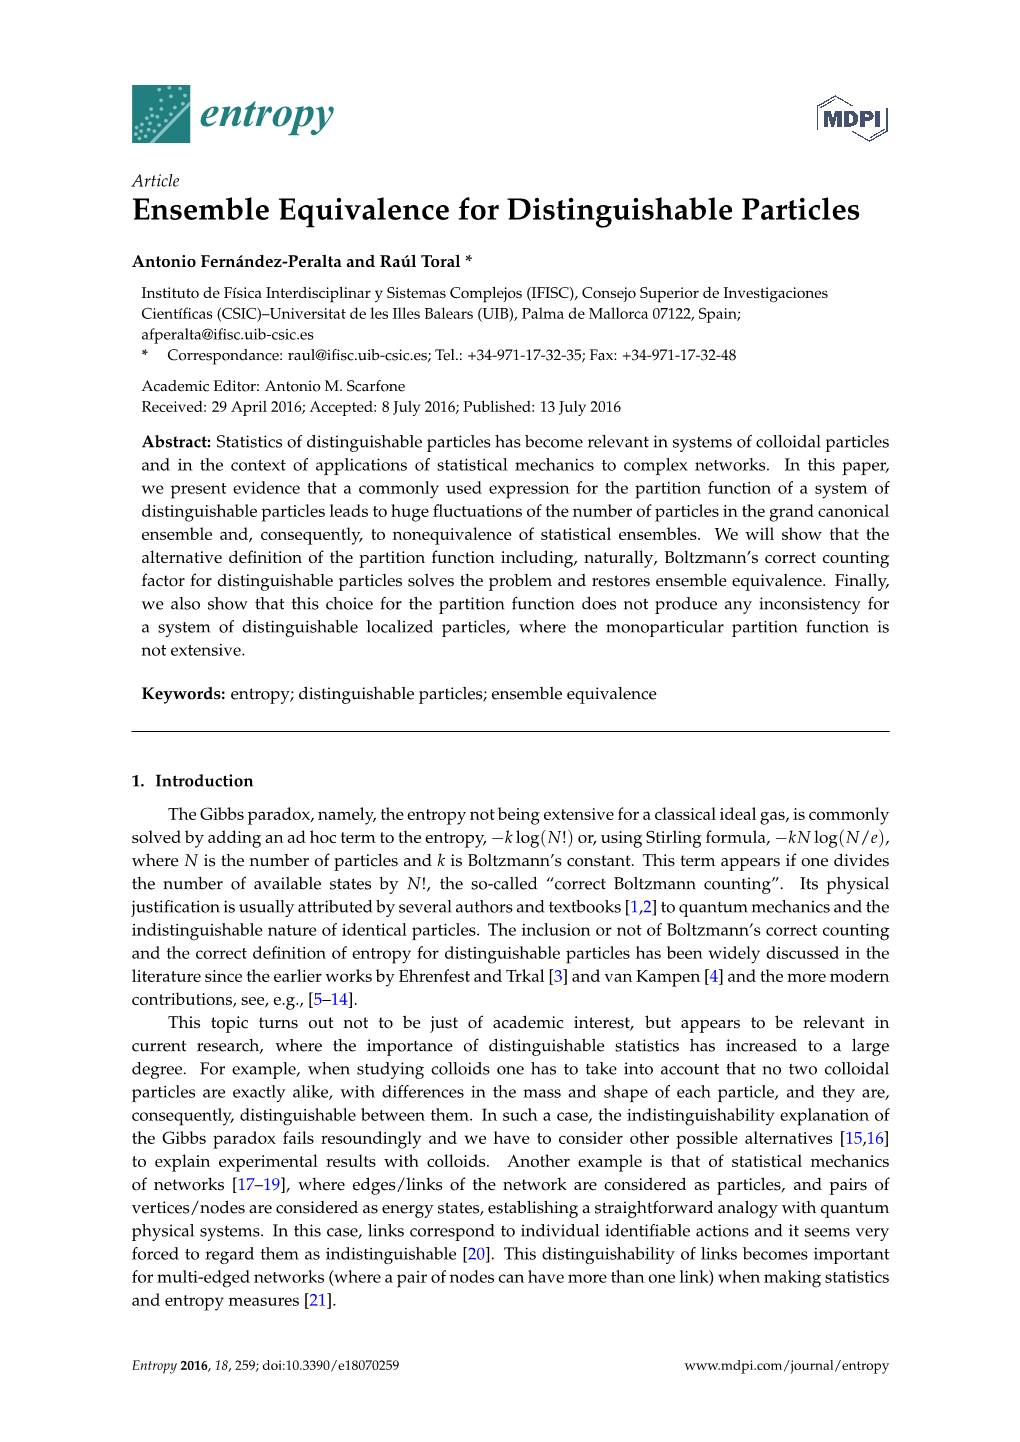 Ensemble Equivalence for Distinguishable Particles